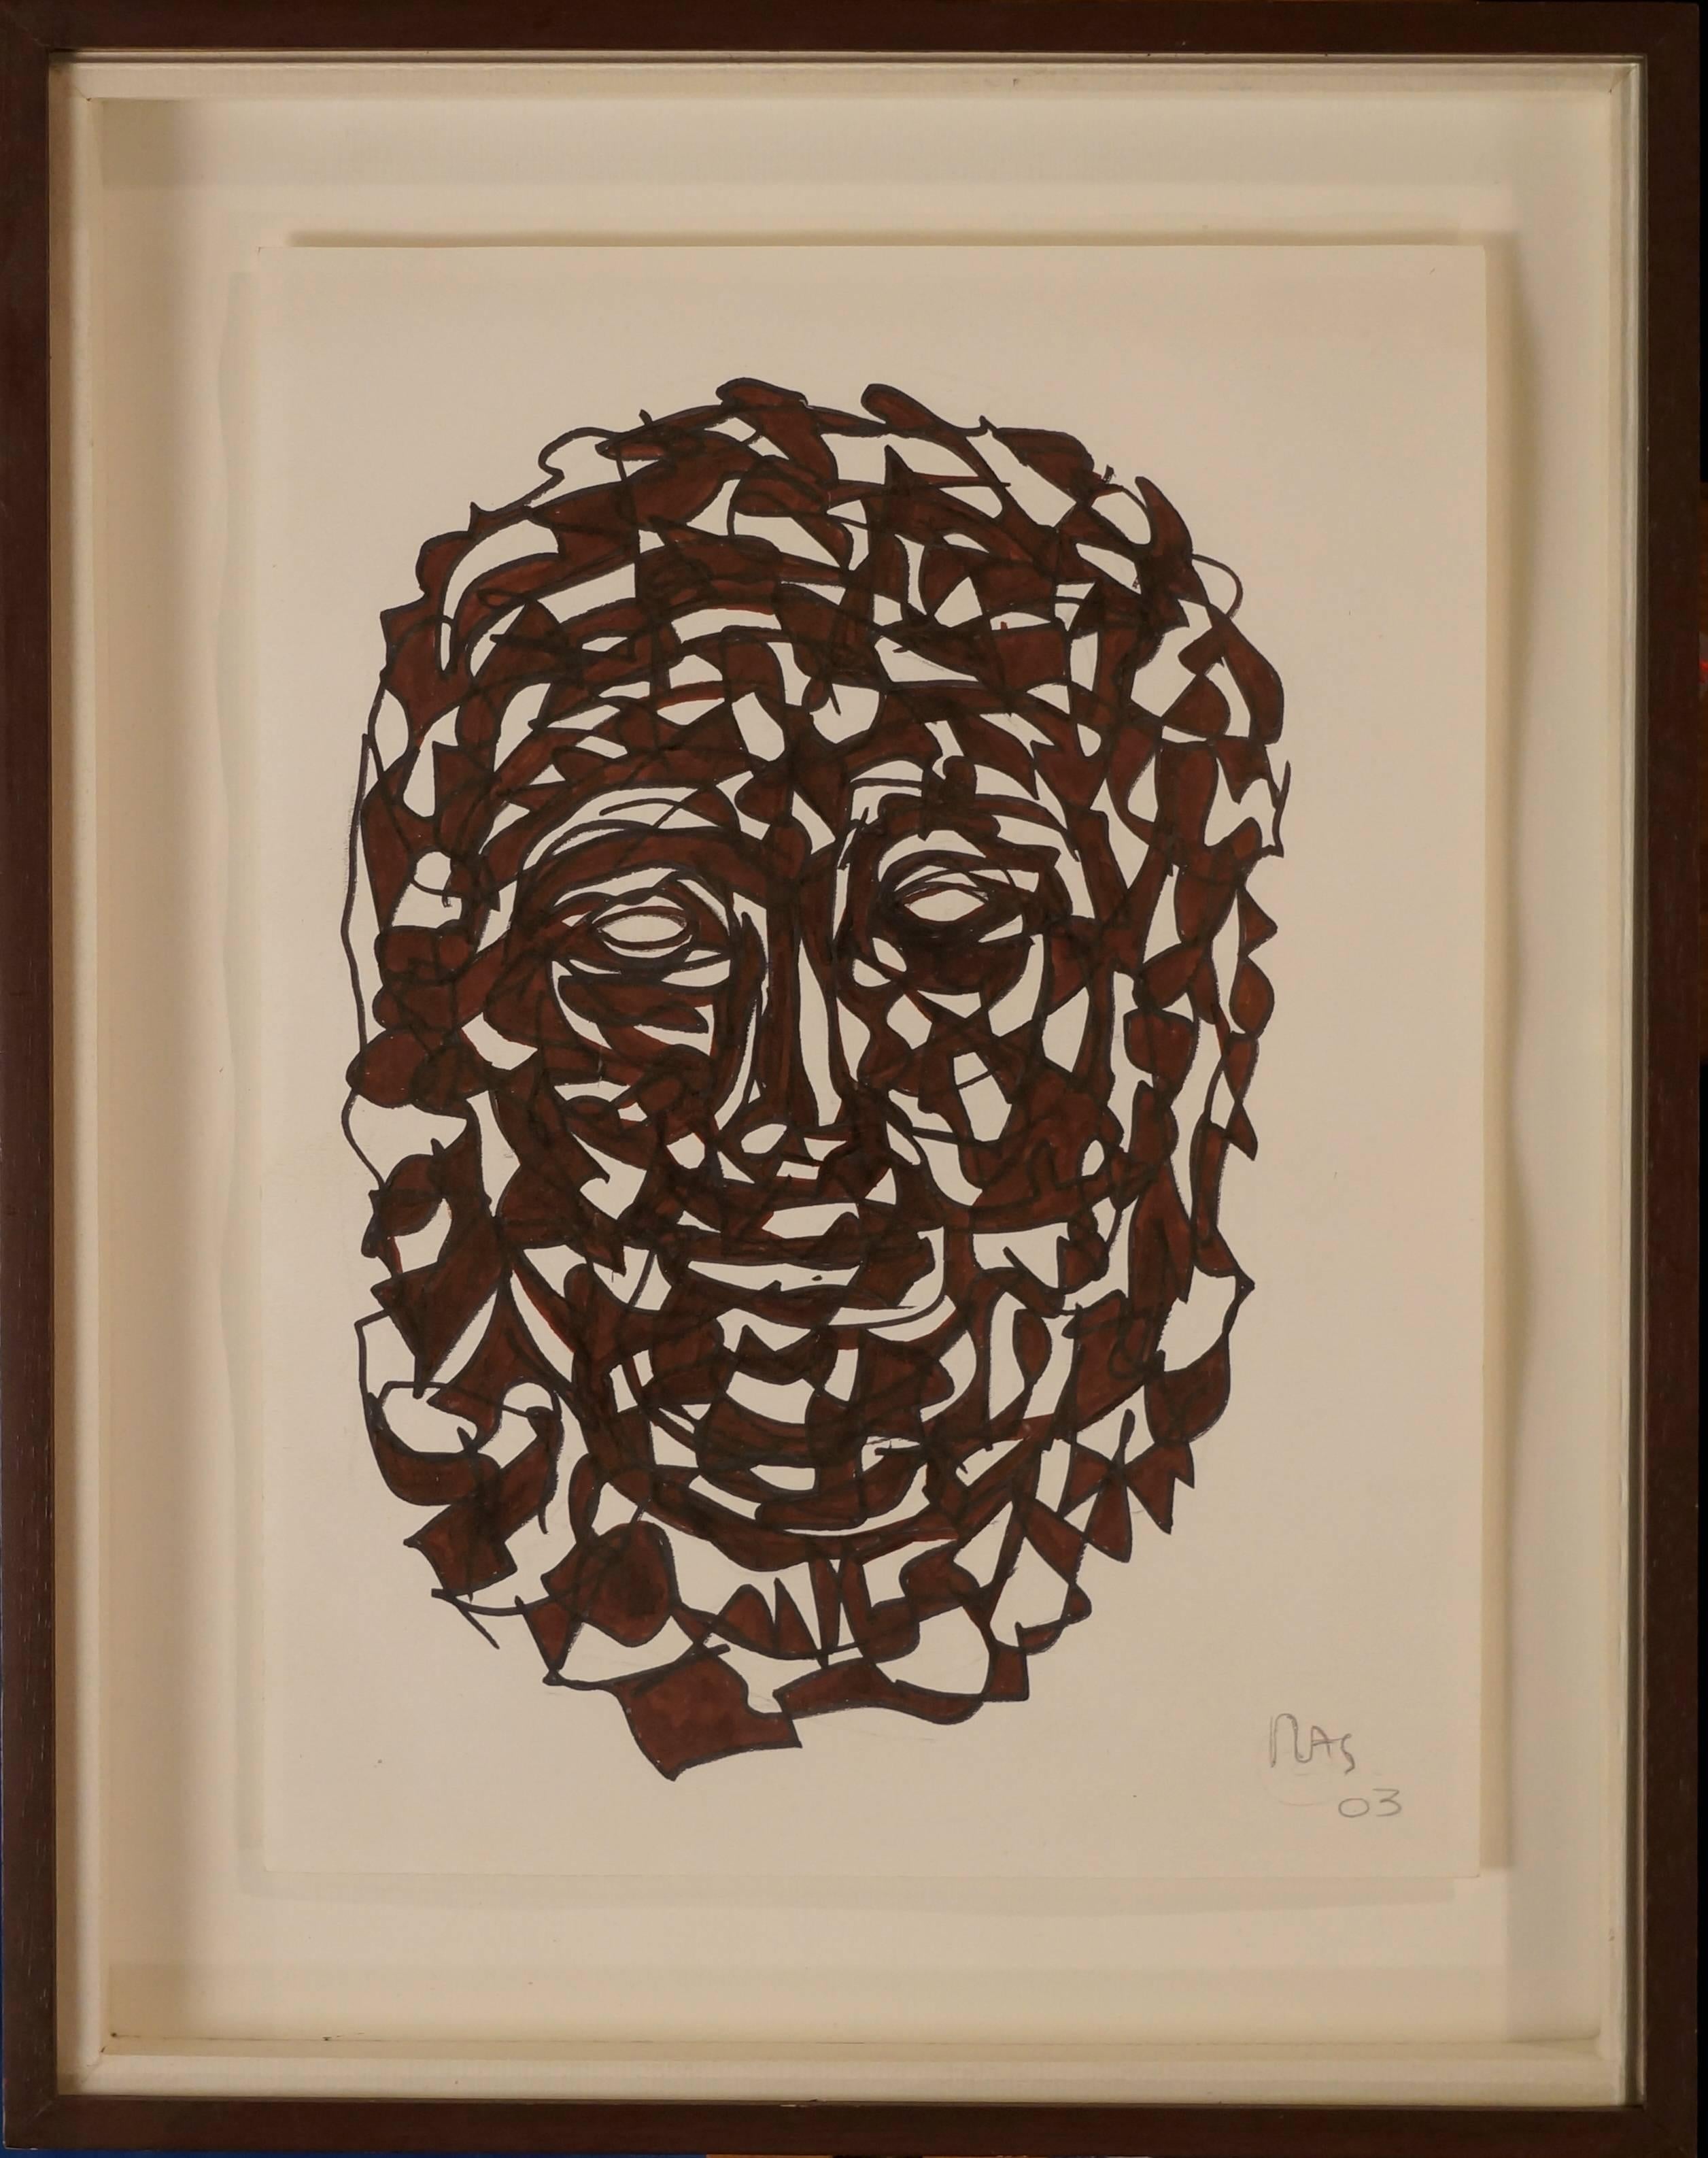 Mas Jean Figurative Art - Face, 2003 - gouache, 31x23 cm., framed